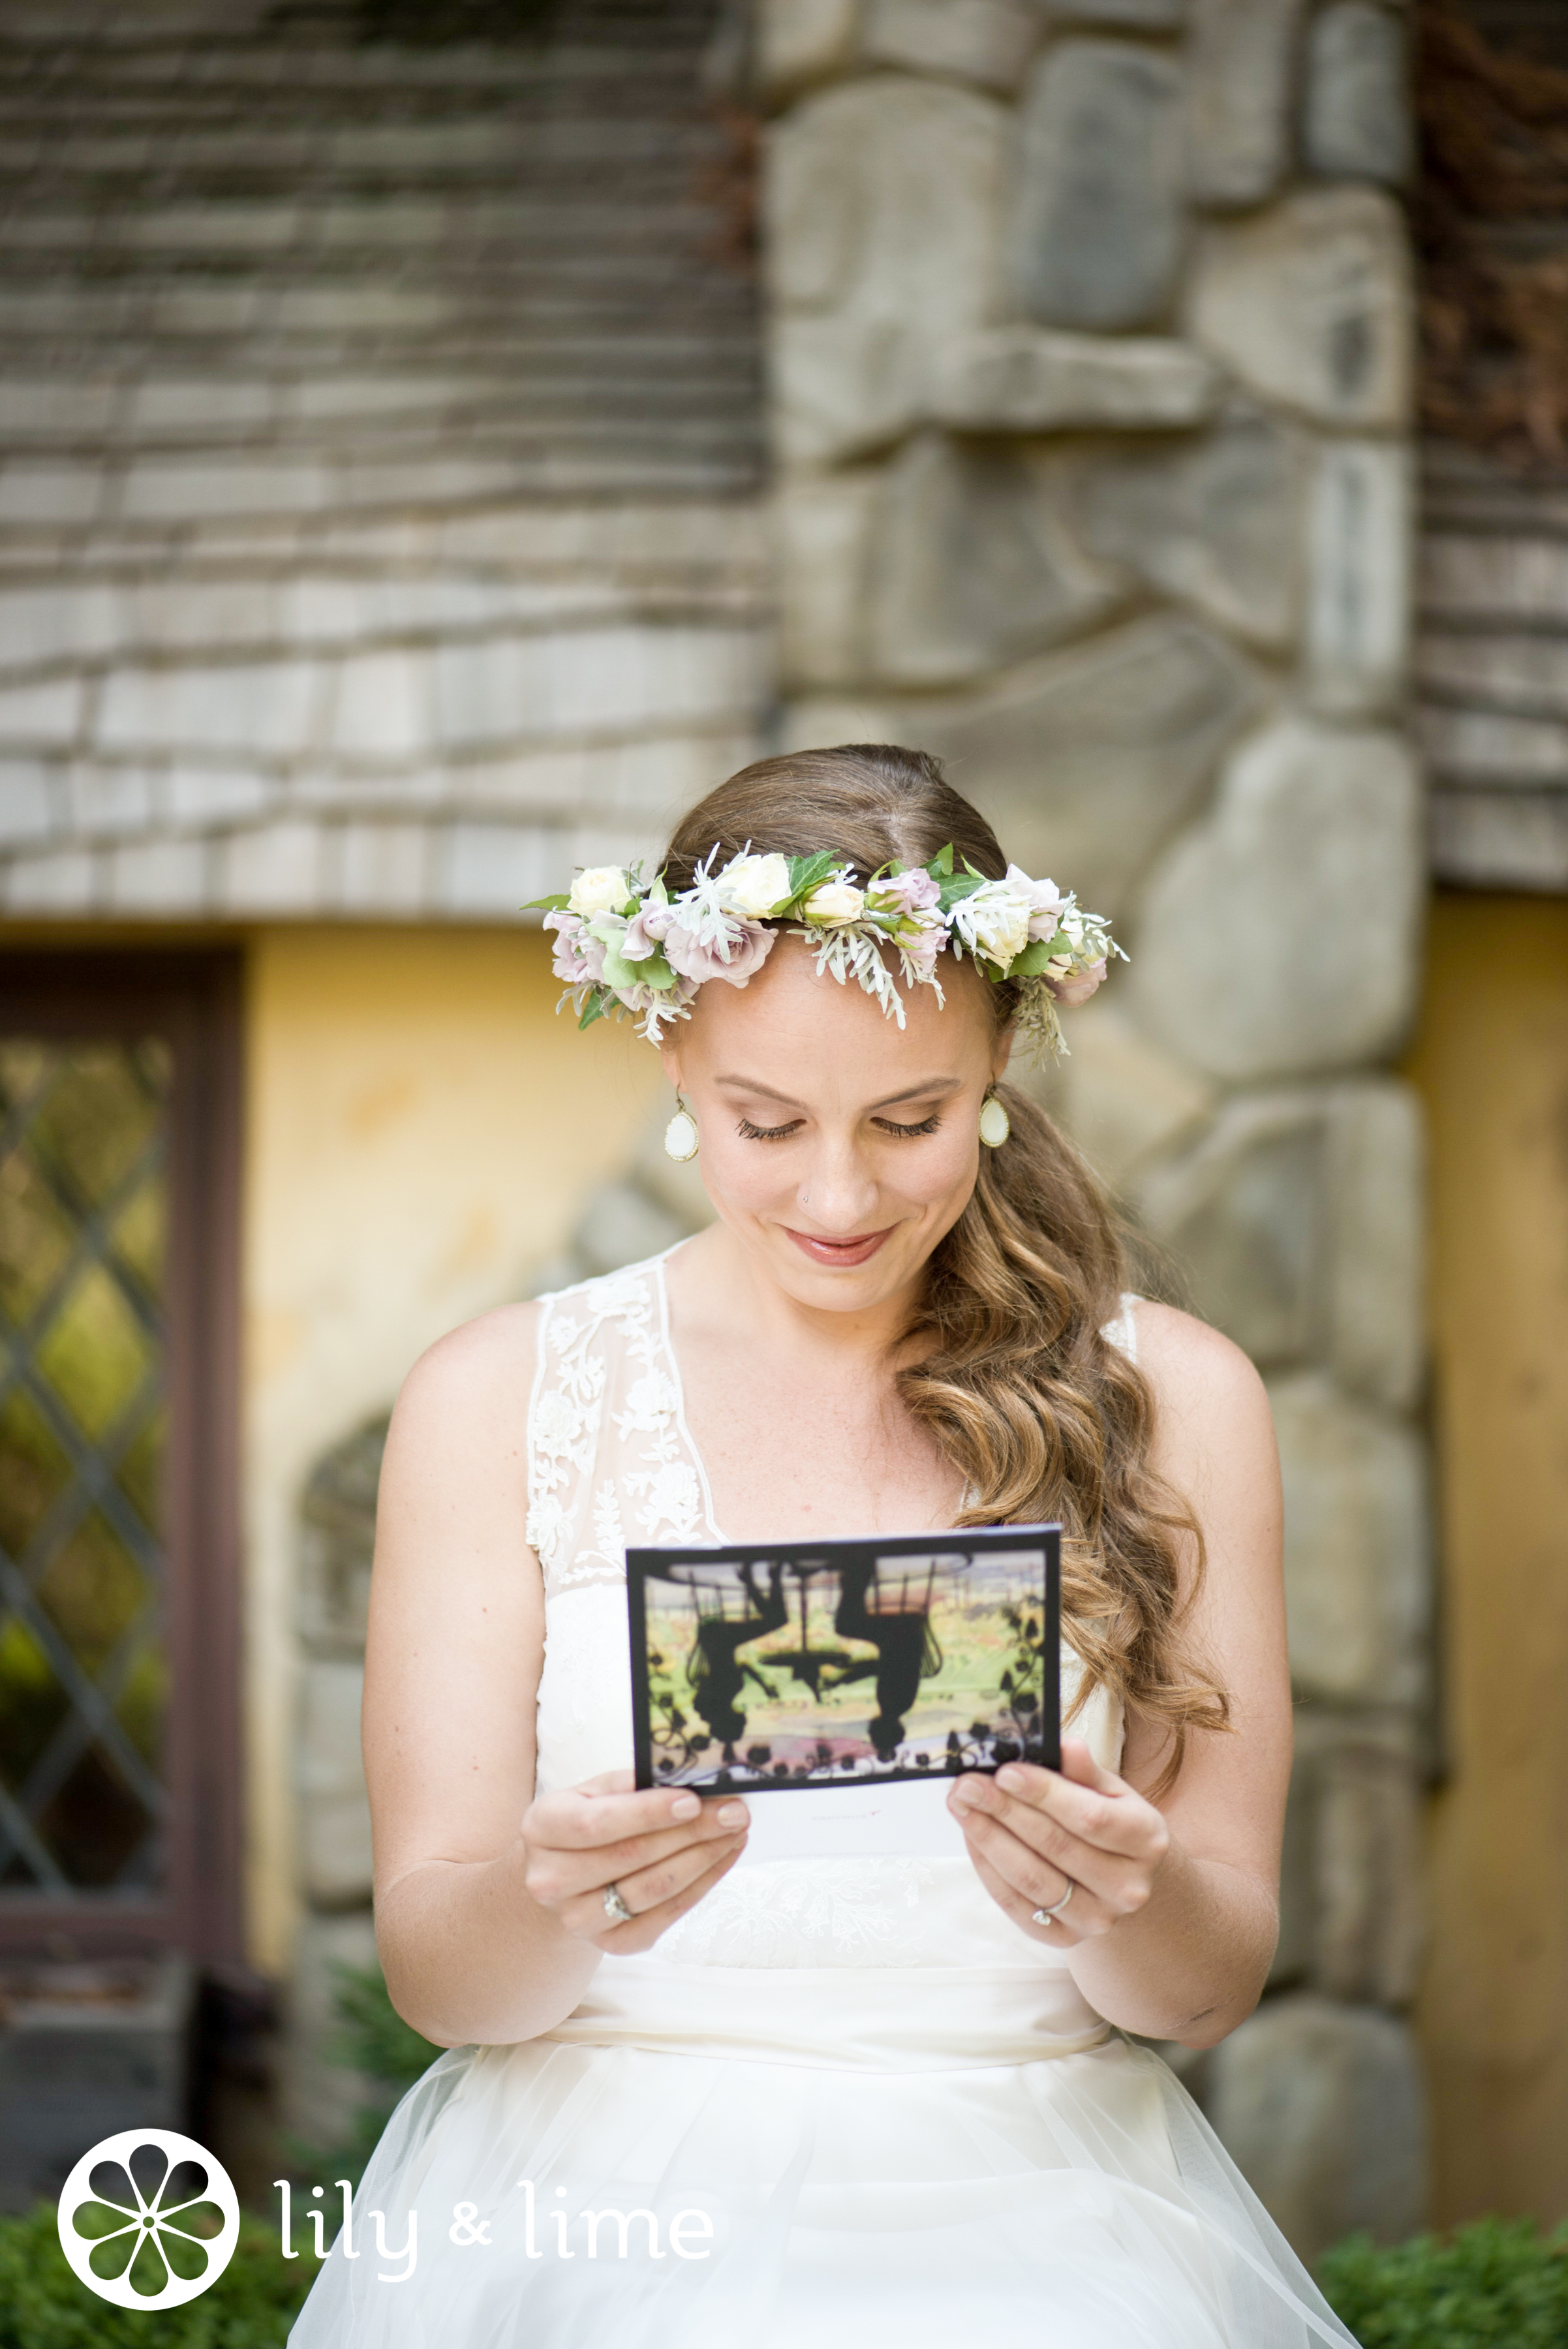 flower crown bride reading wedding day love note